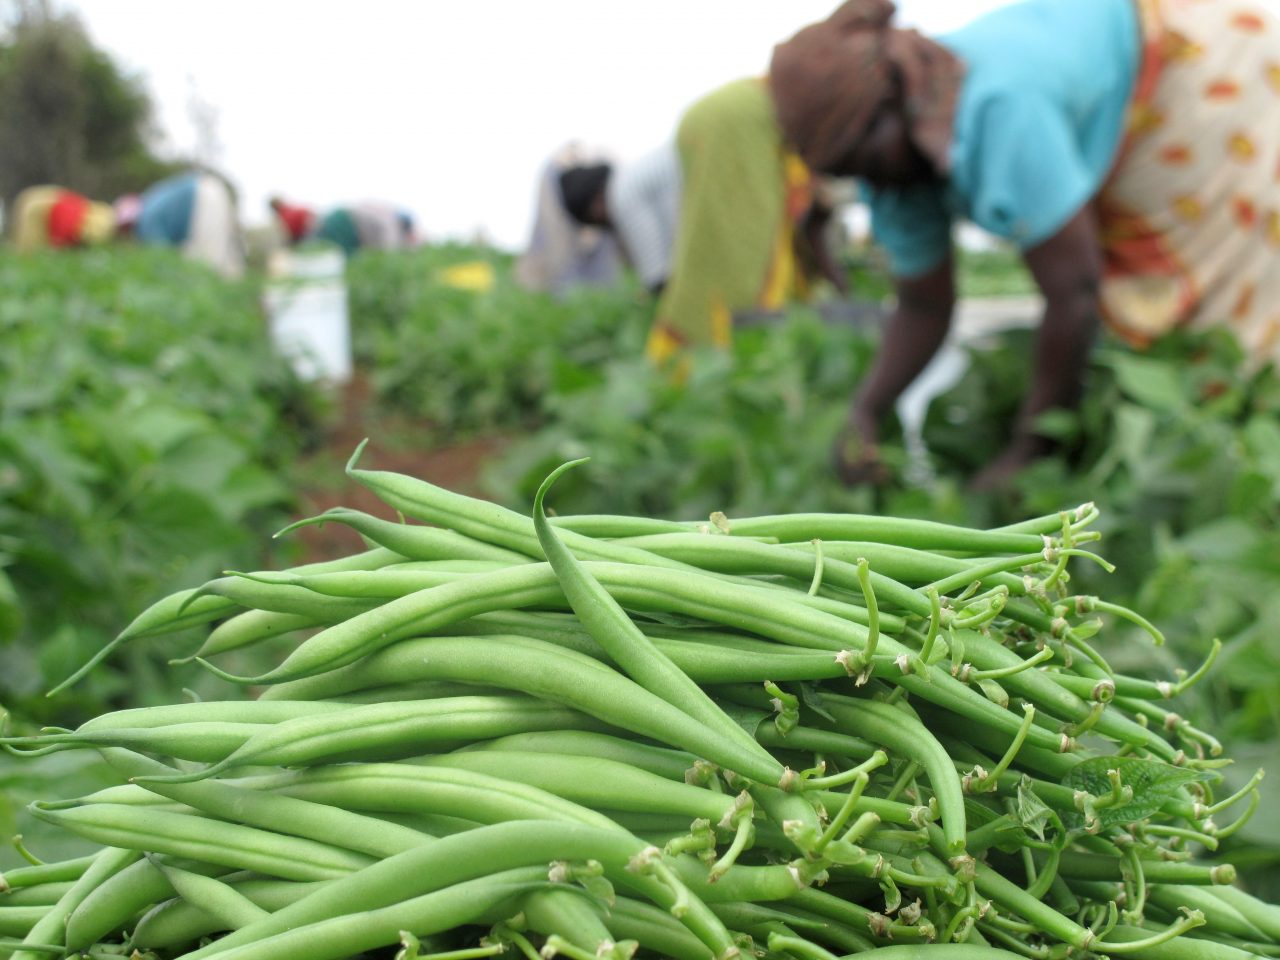 FRENCH BEANS GREEN BEANS FARMING IN KENYA